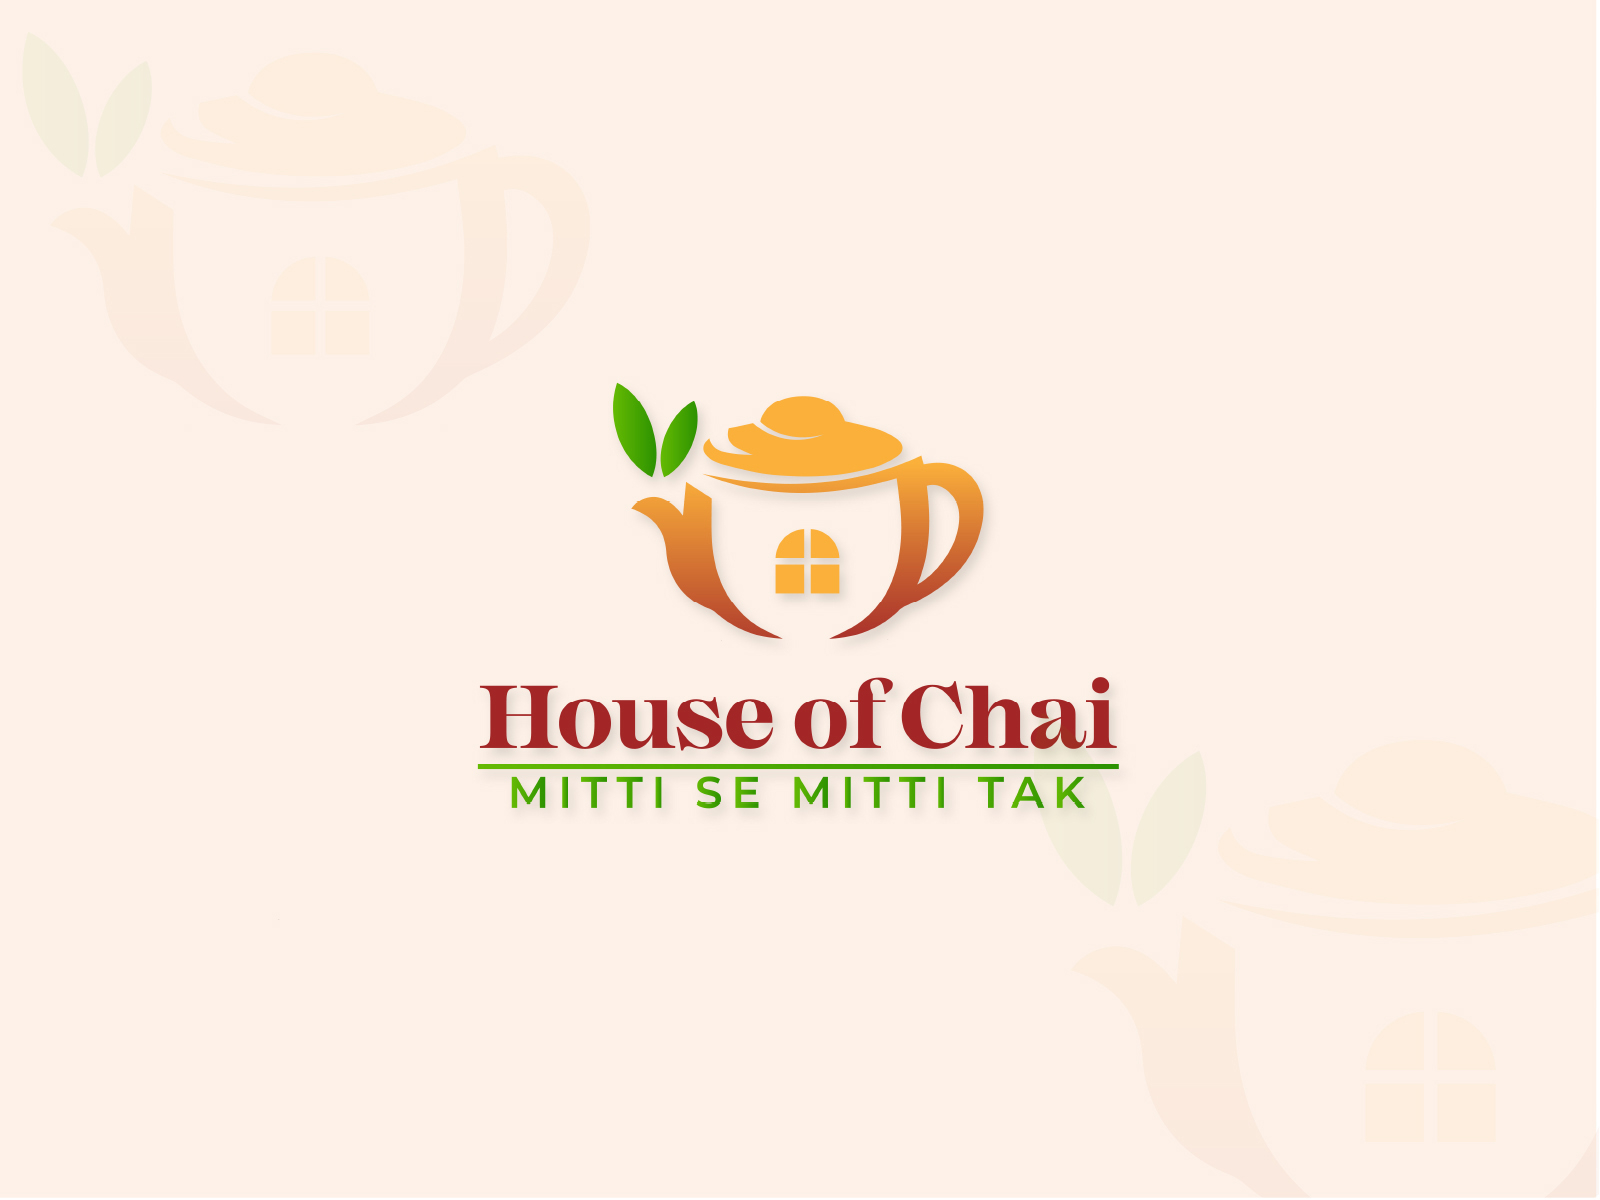 Kulhad chai logo soil pot tea Royalty Free Vector Image